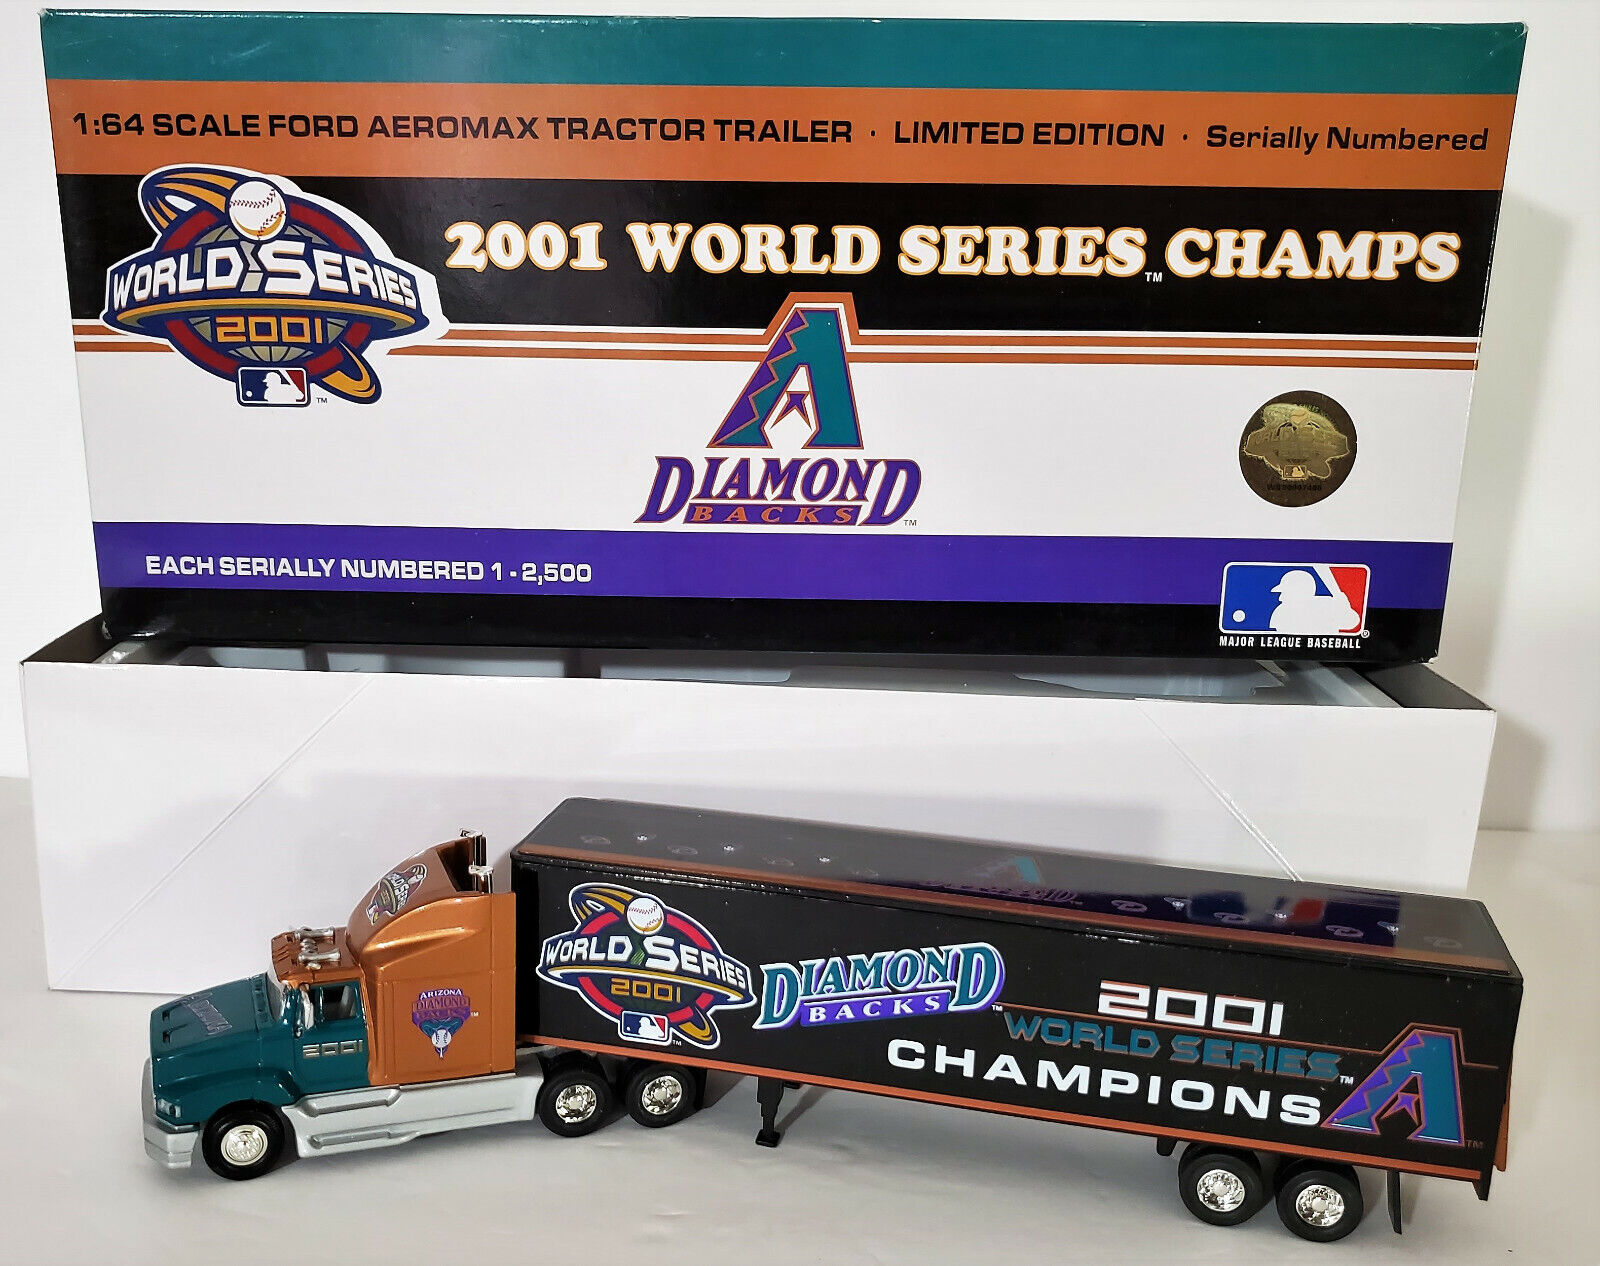 Arizona Diamondbacks 2001 World Series Champs Tractor Trailer